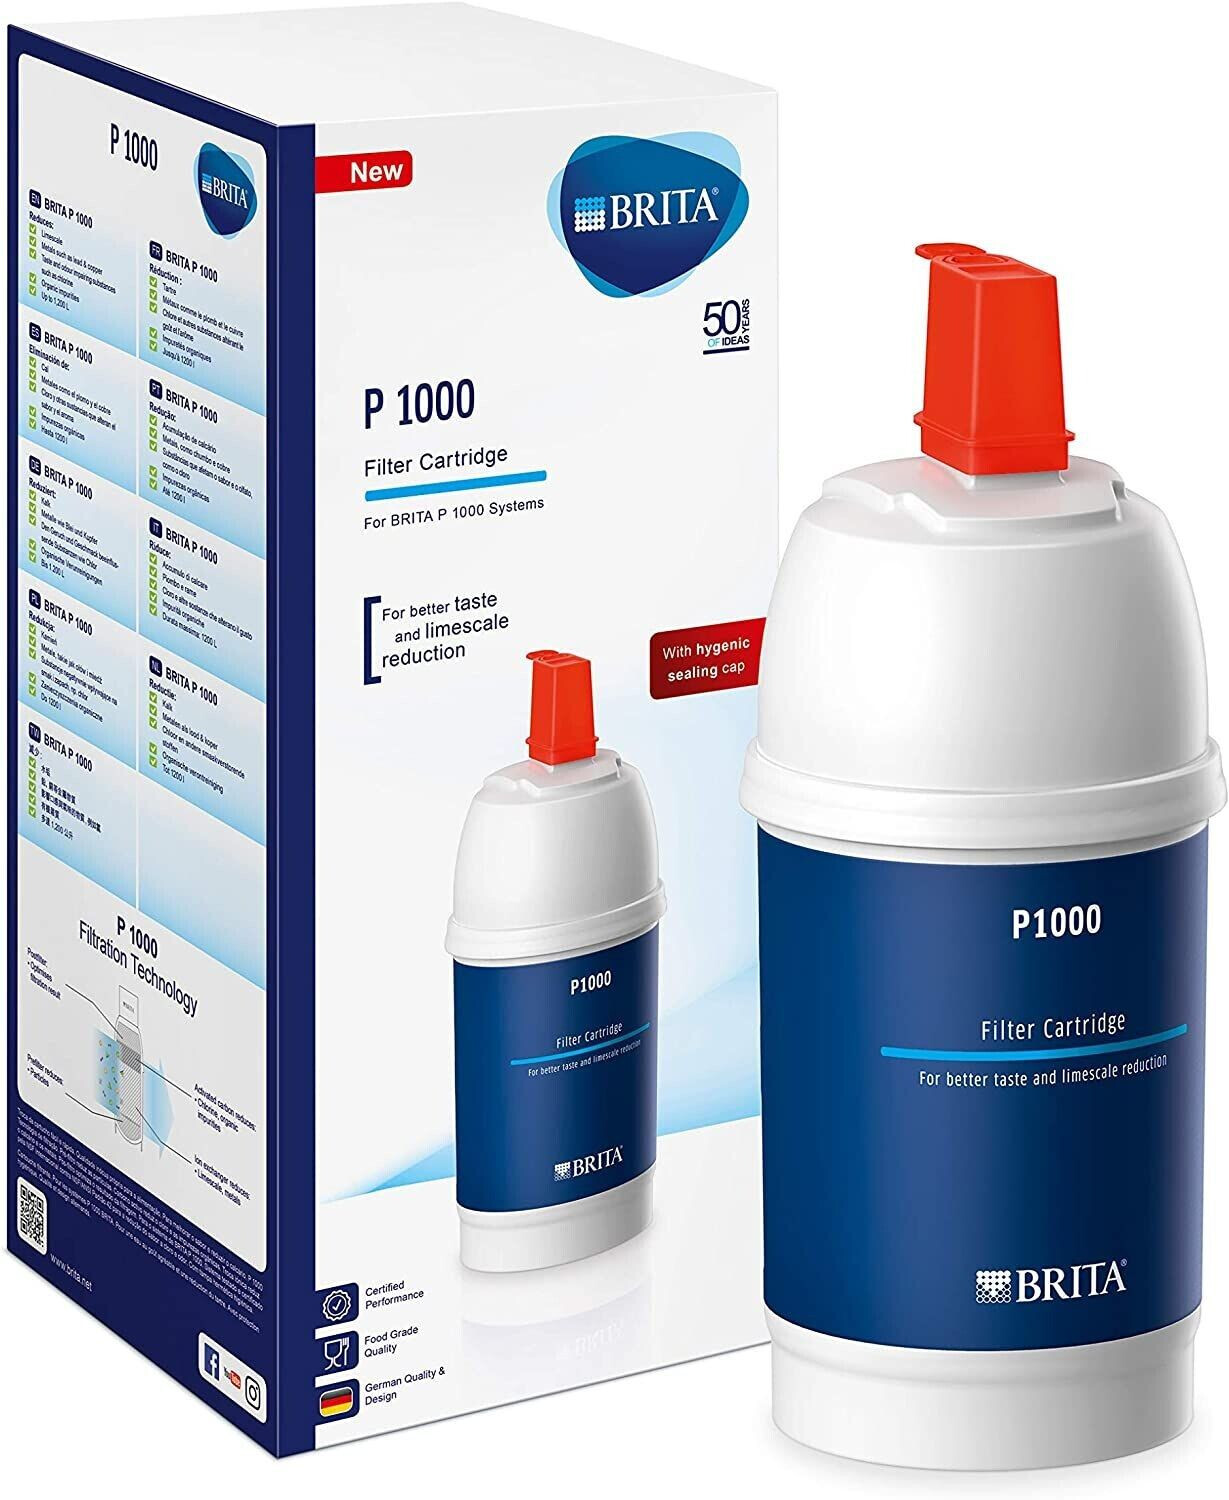 brita p1000 water filter – Compra brita p1000 water filter con